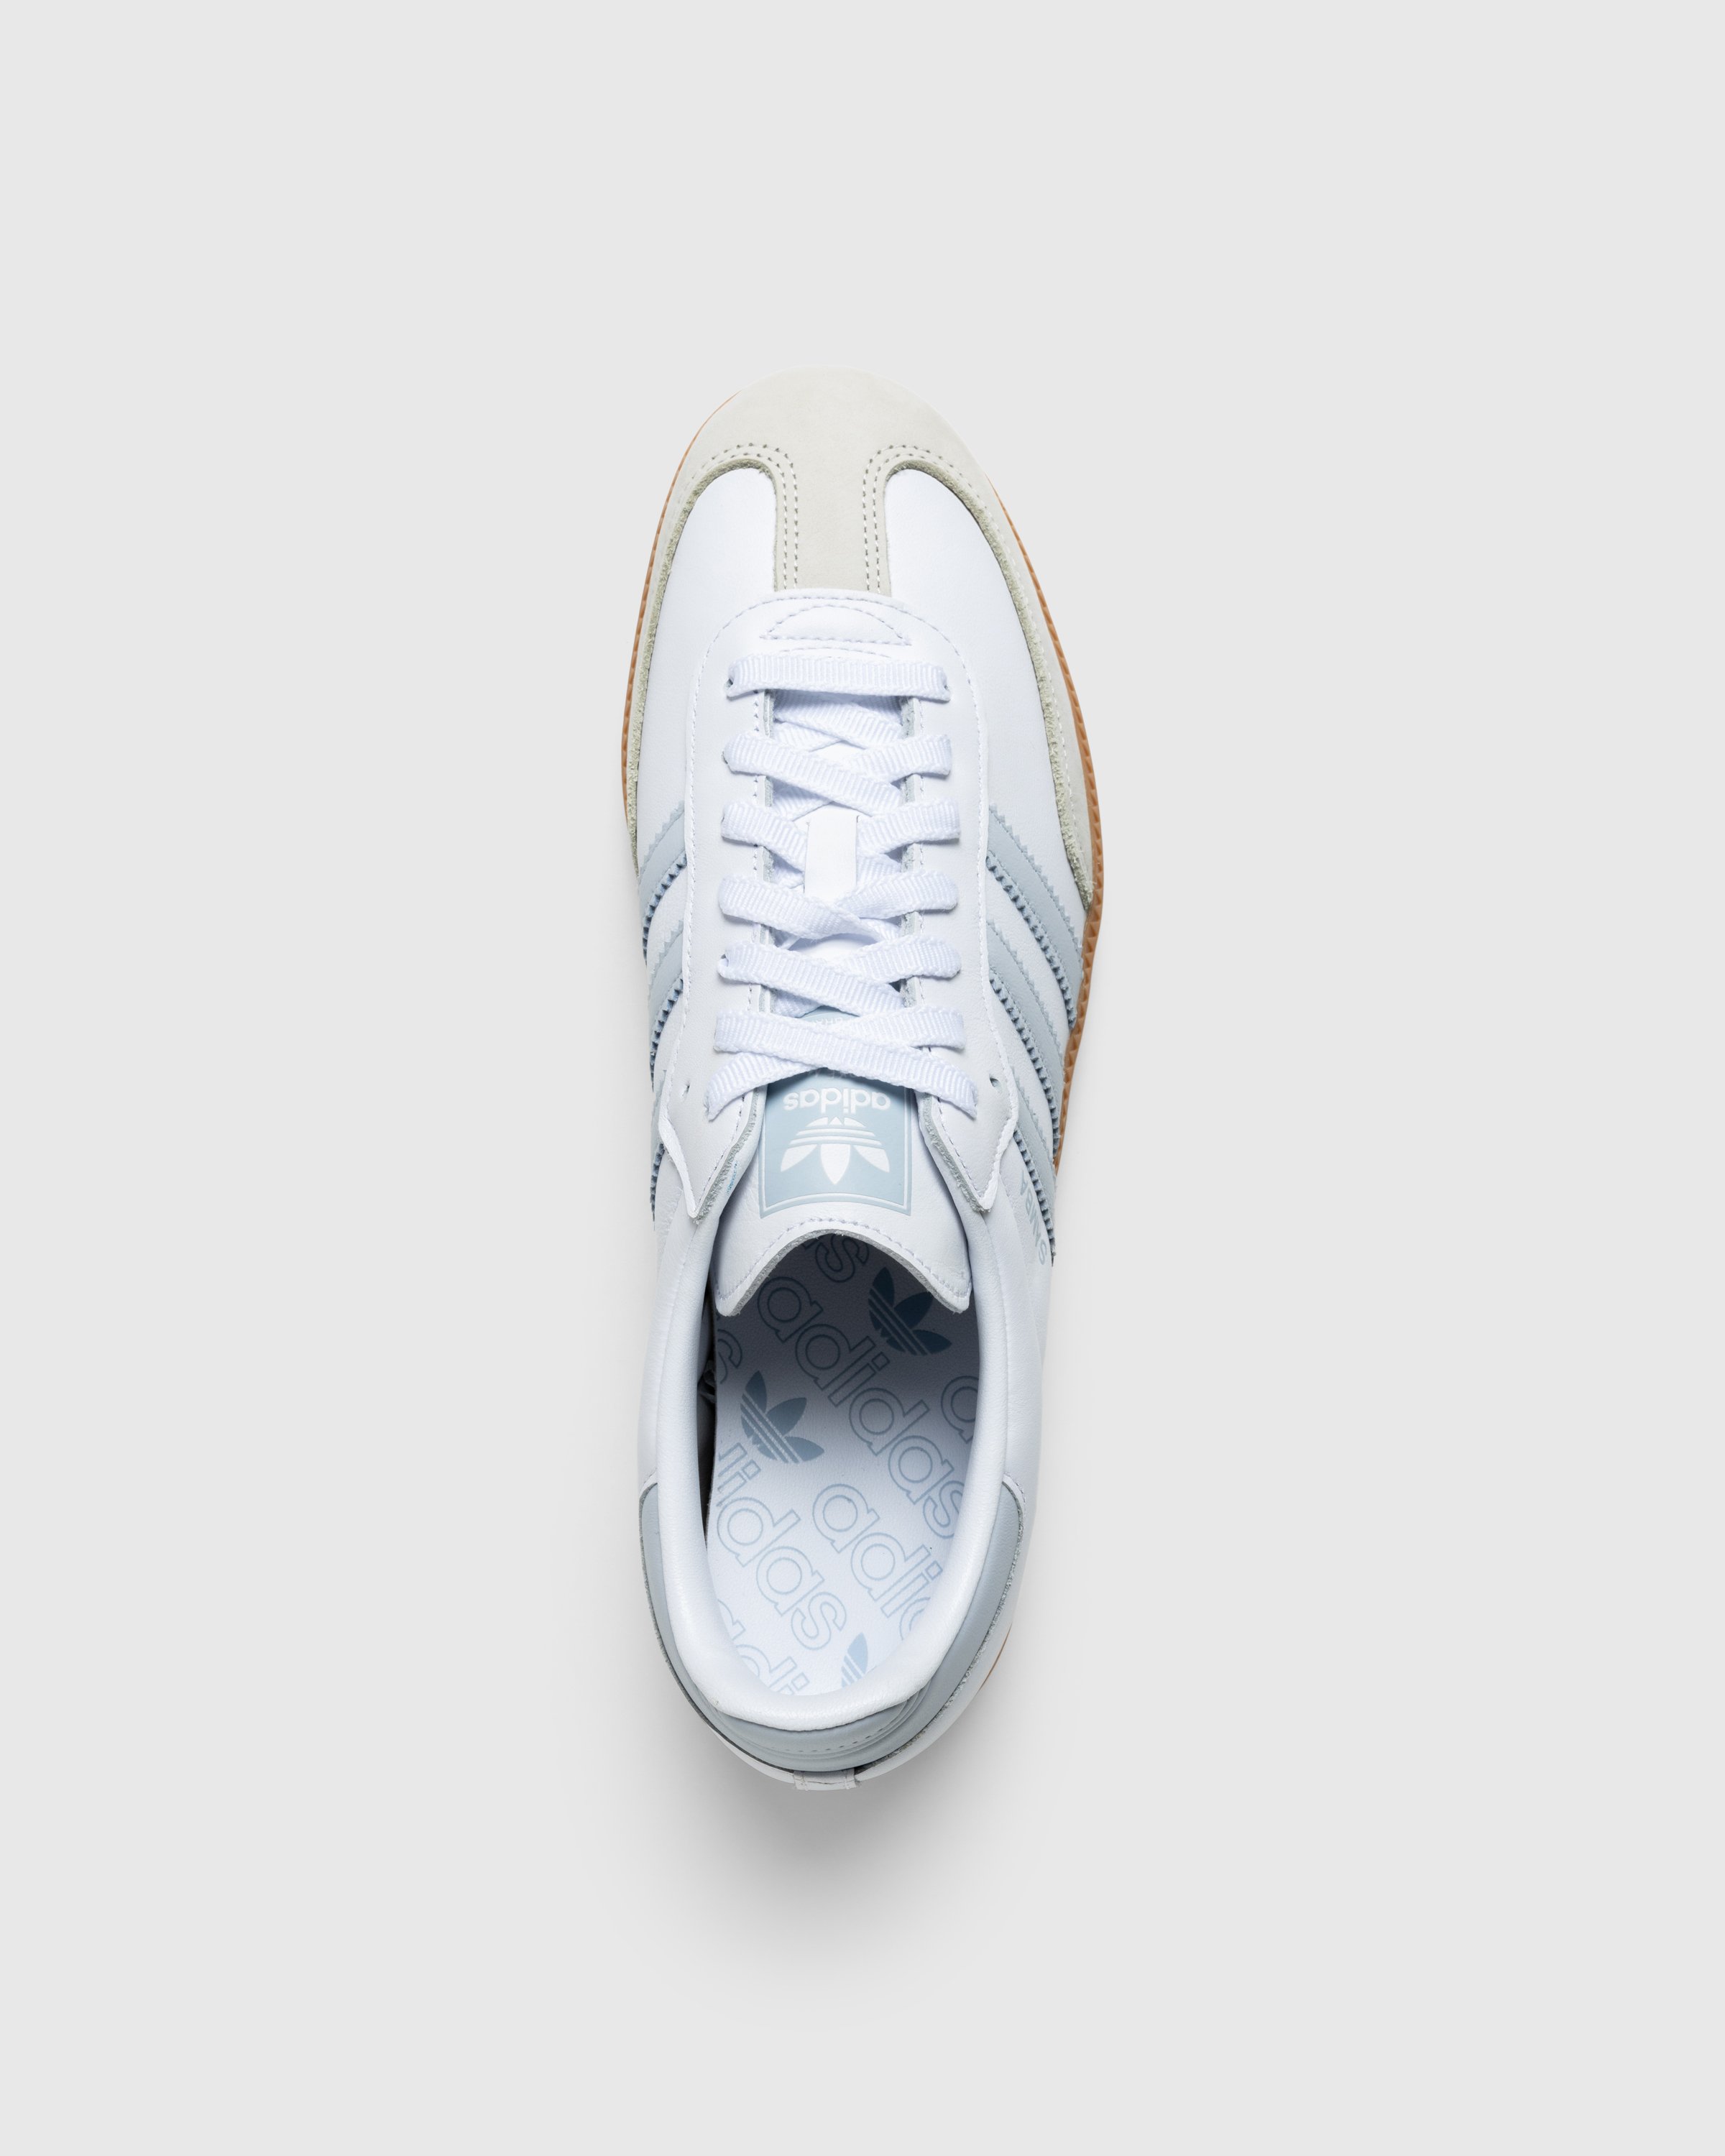 Adidas - Samba Og W          Ftwwht/Halblu/Owhite - Footwear - White - Image 5